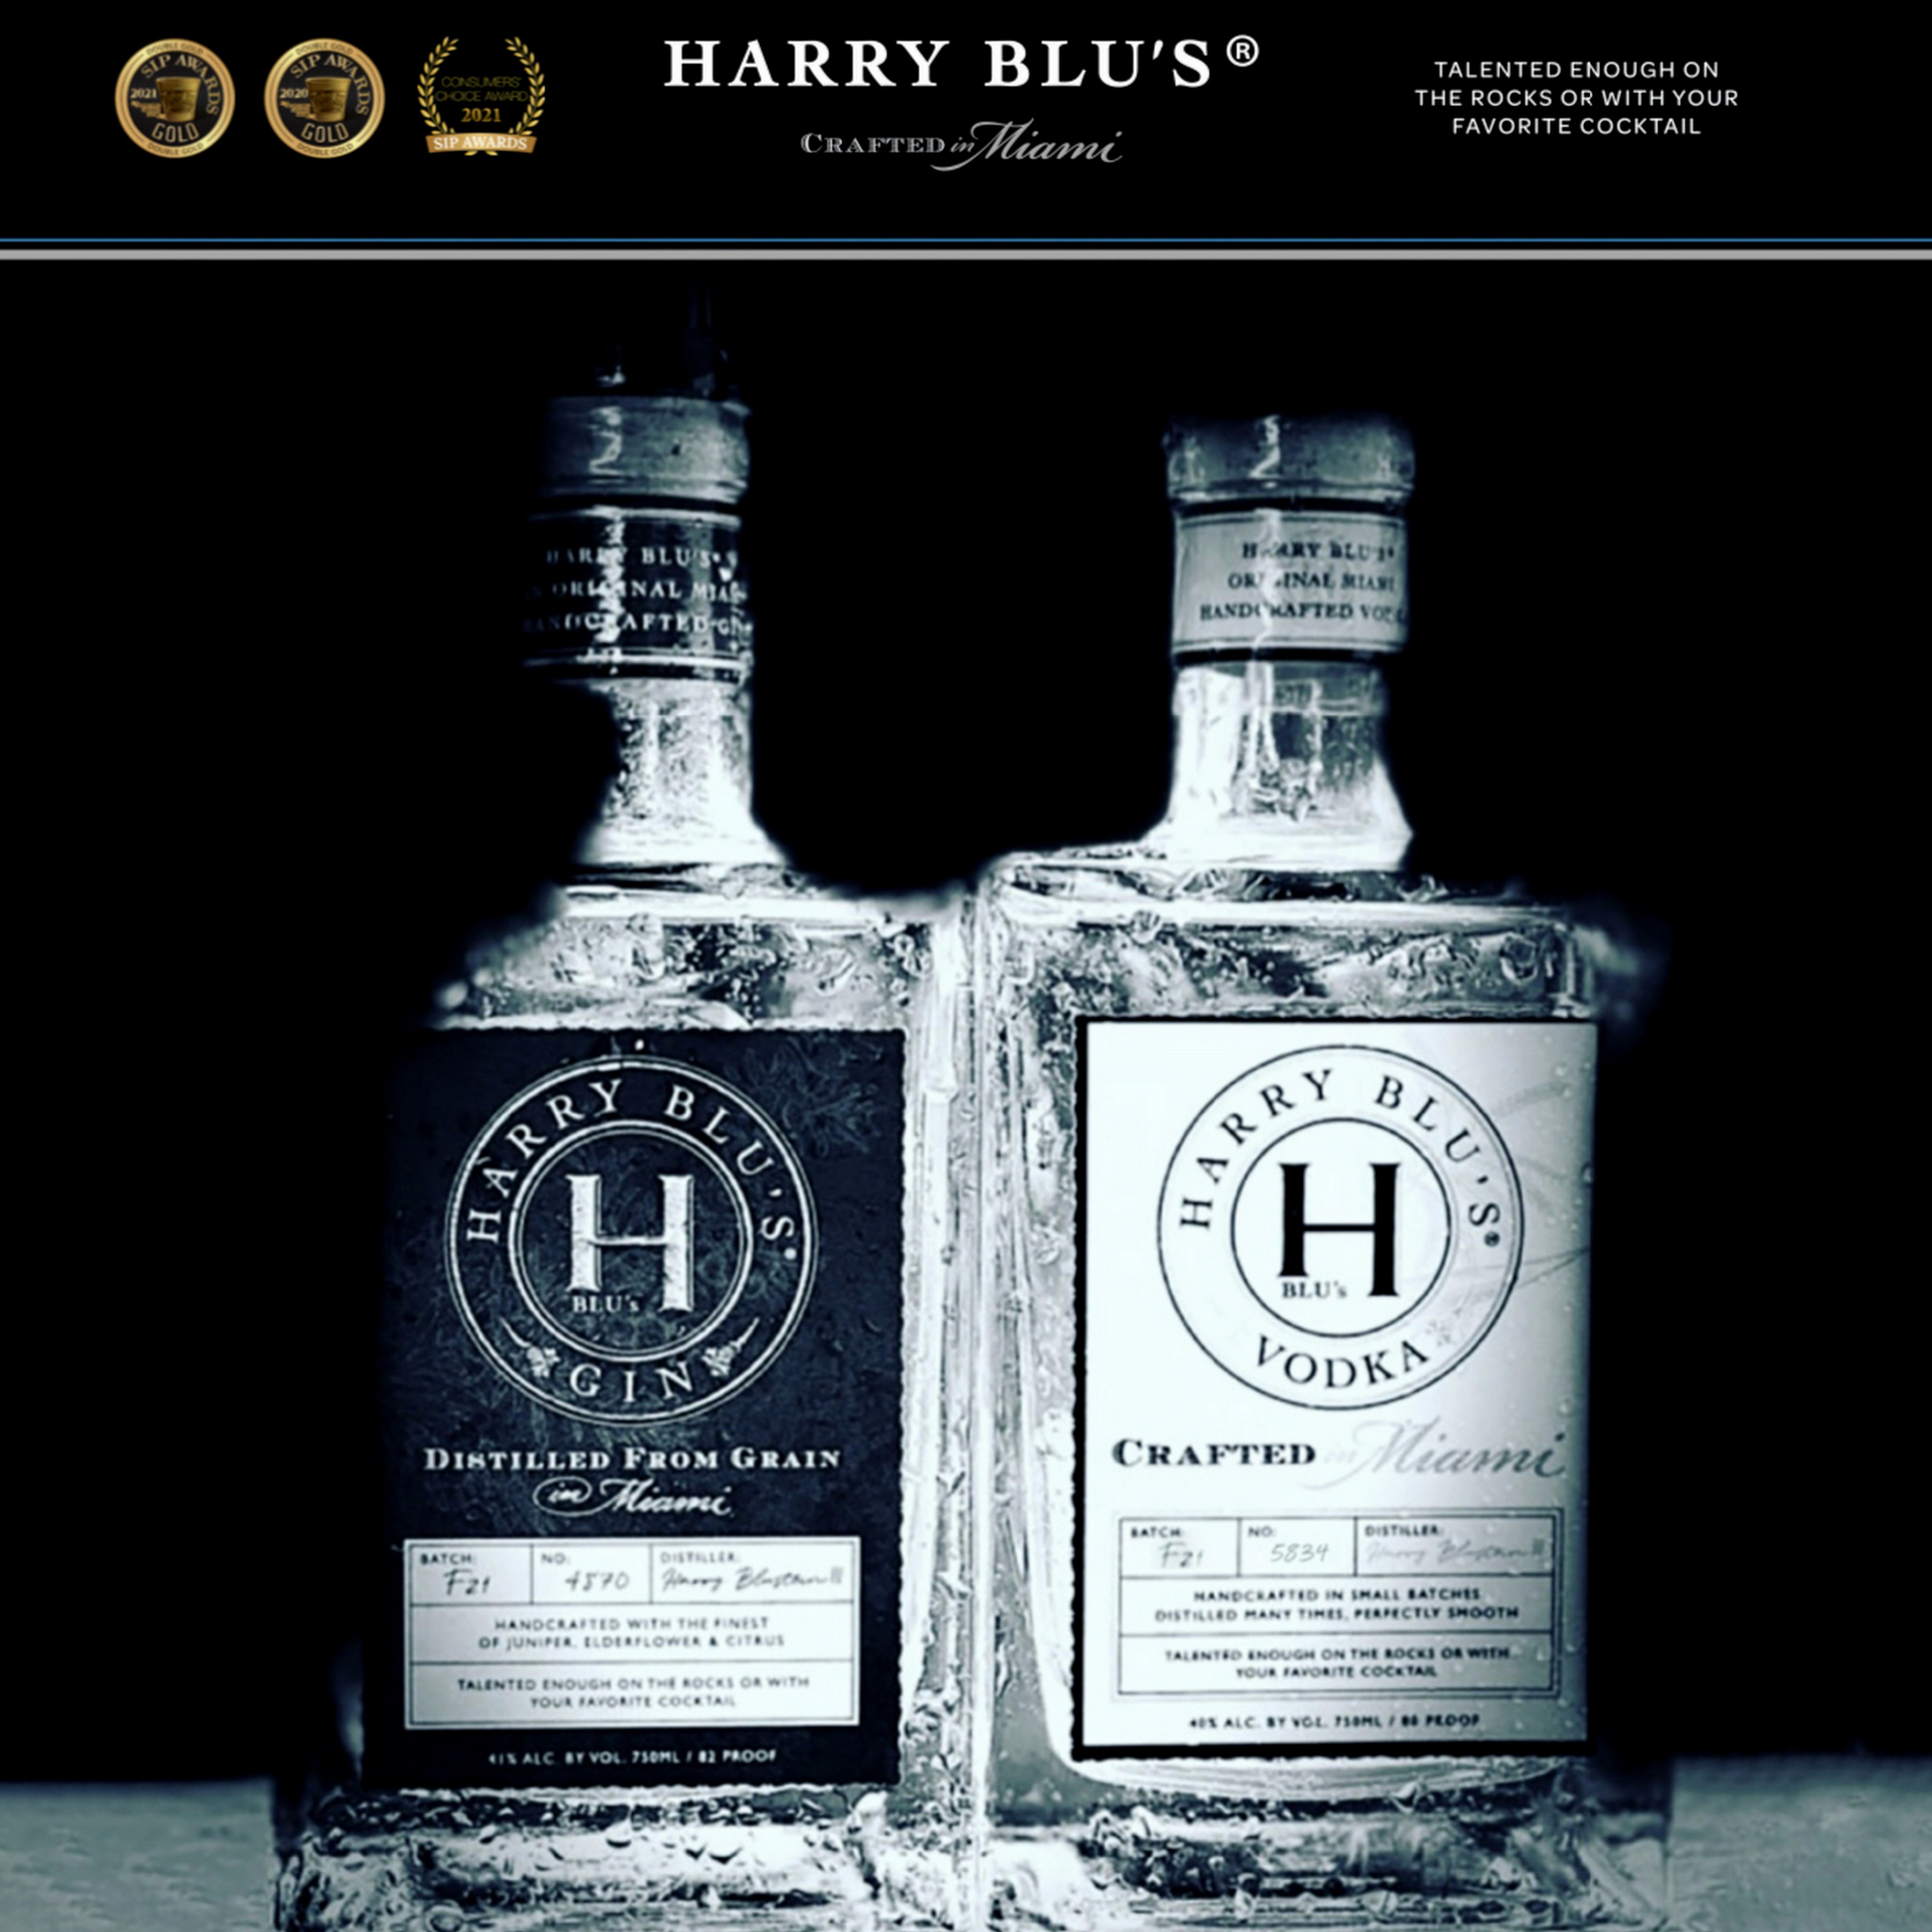 Harry Blu's Gin